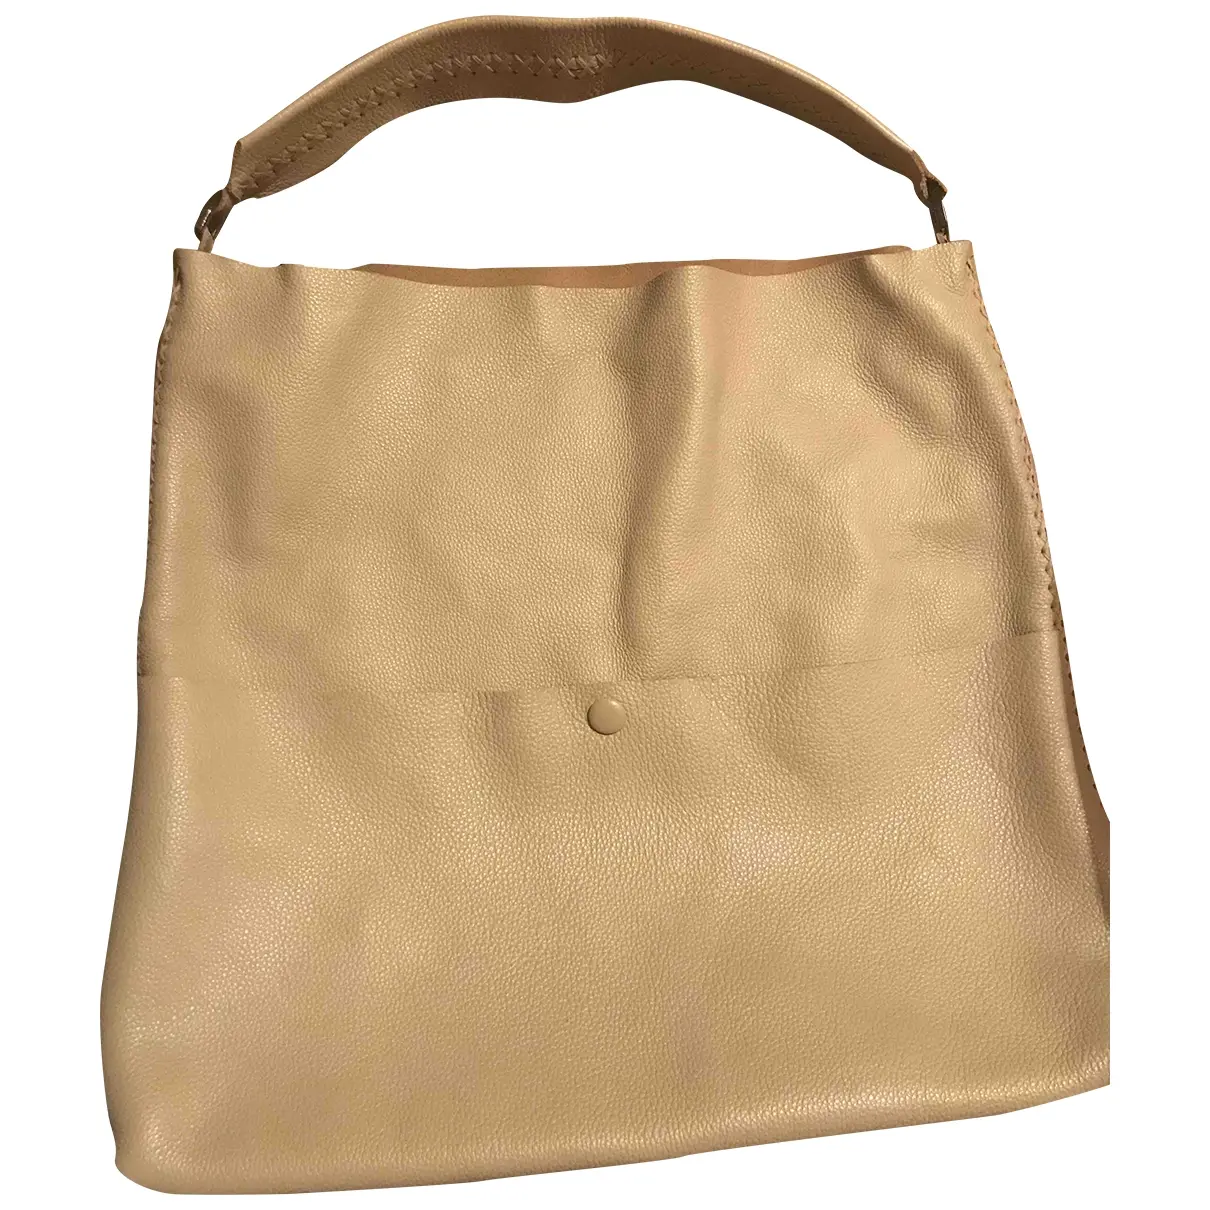 Leather handbag Callista Crafts